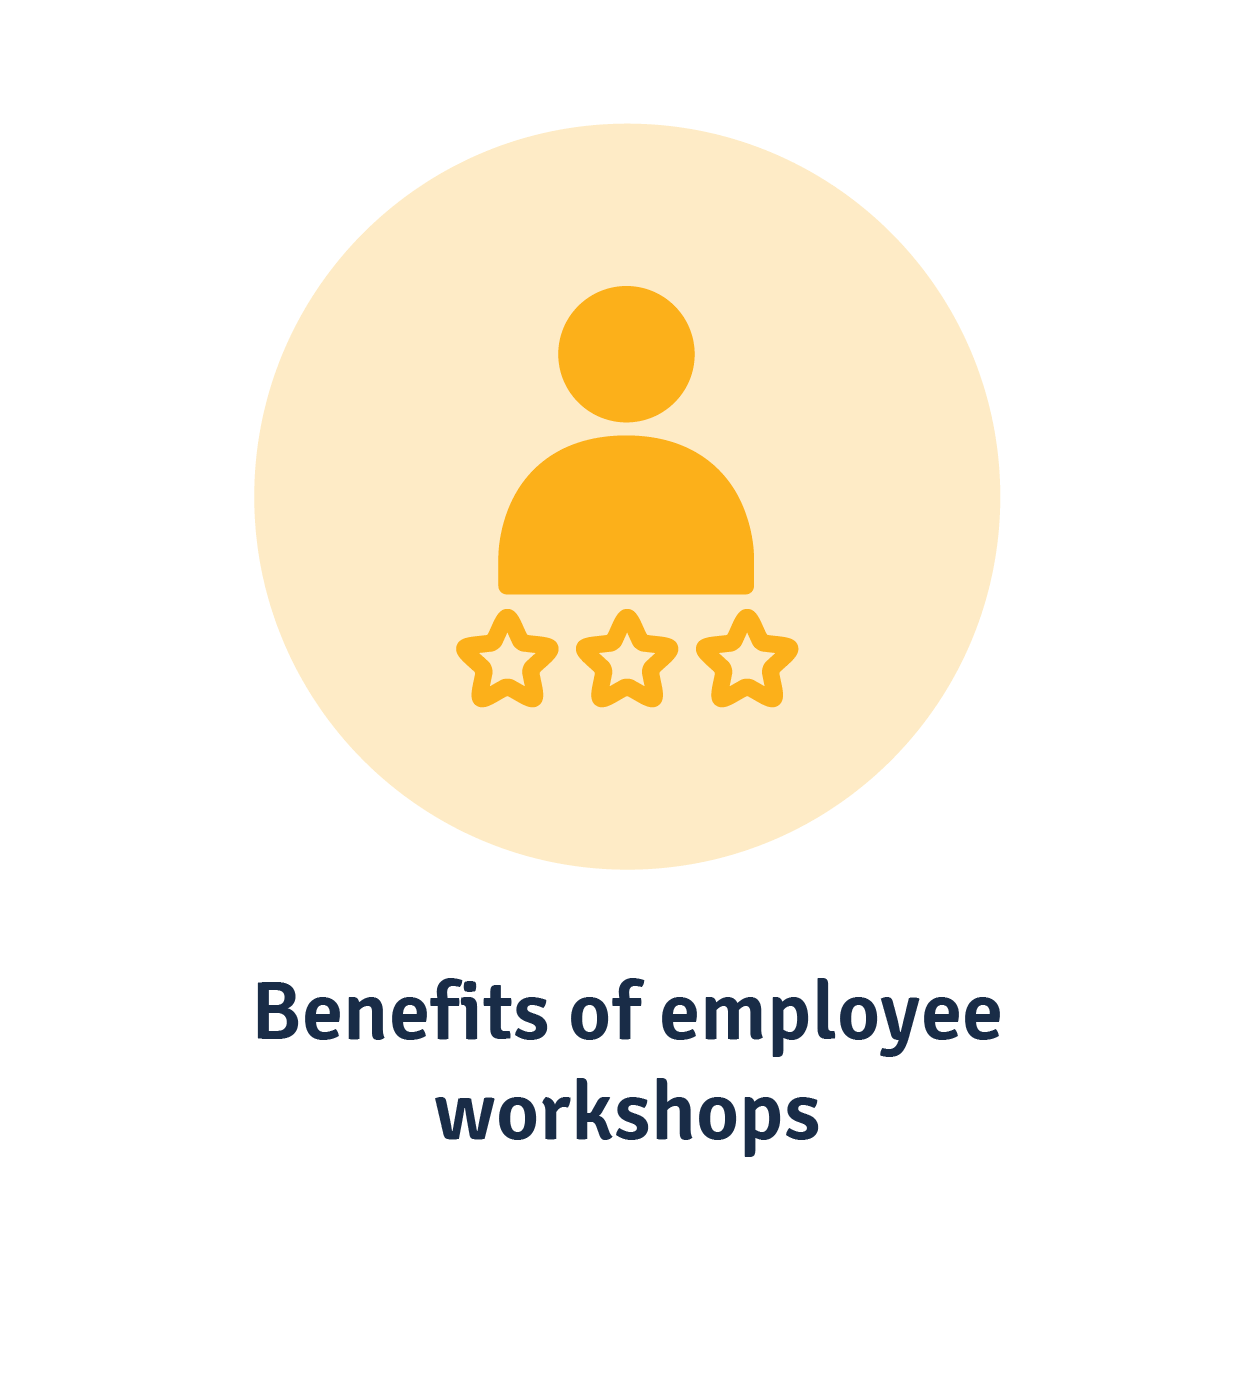 Benefits of employee workshops